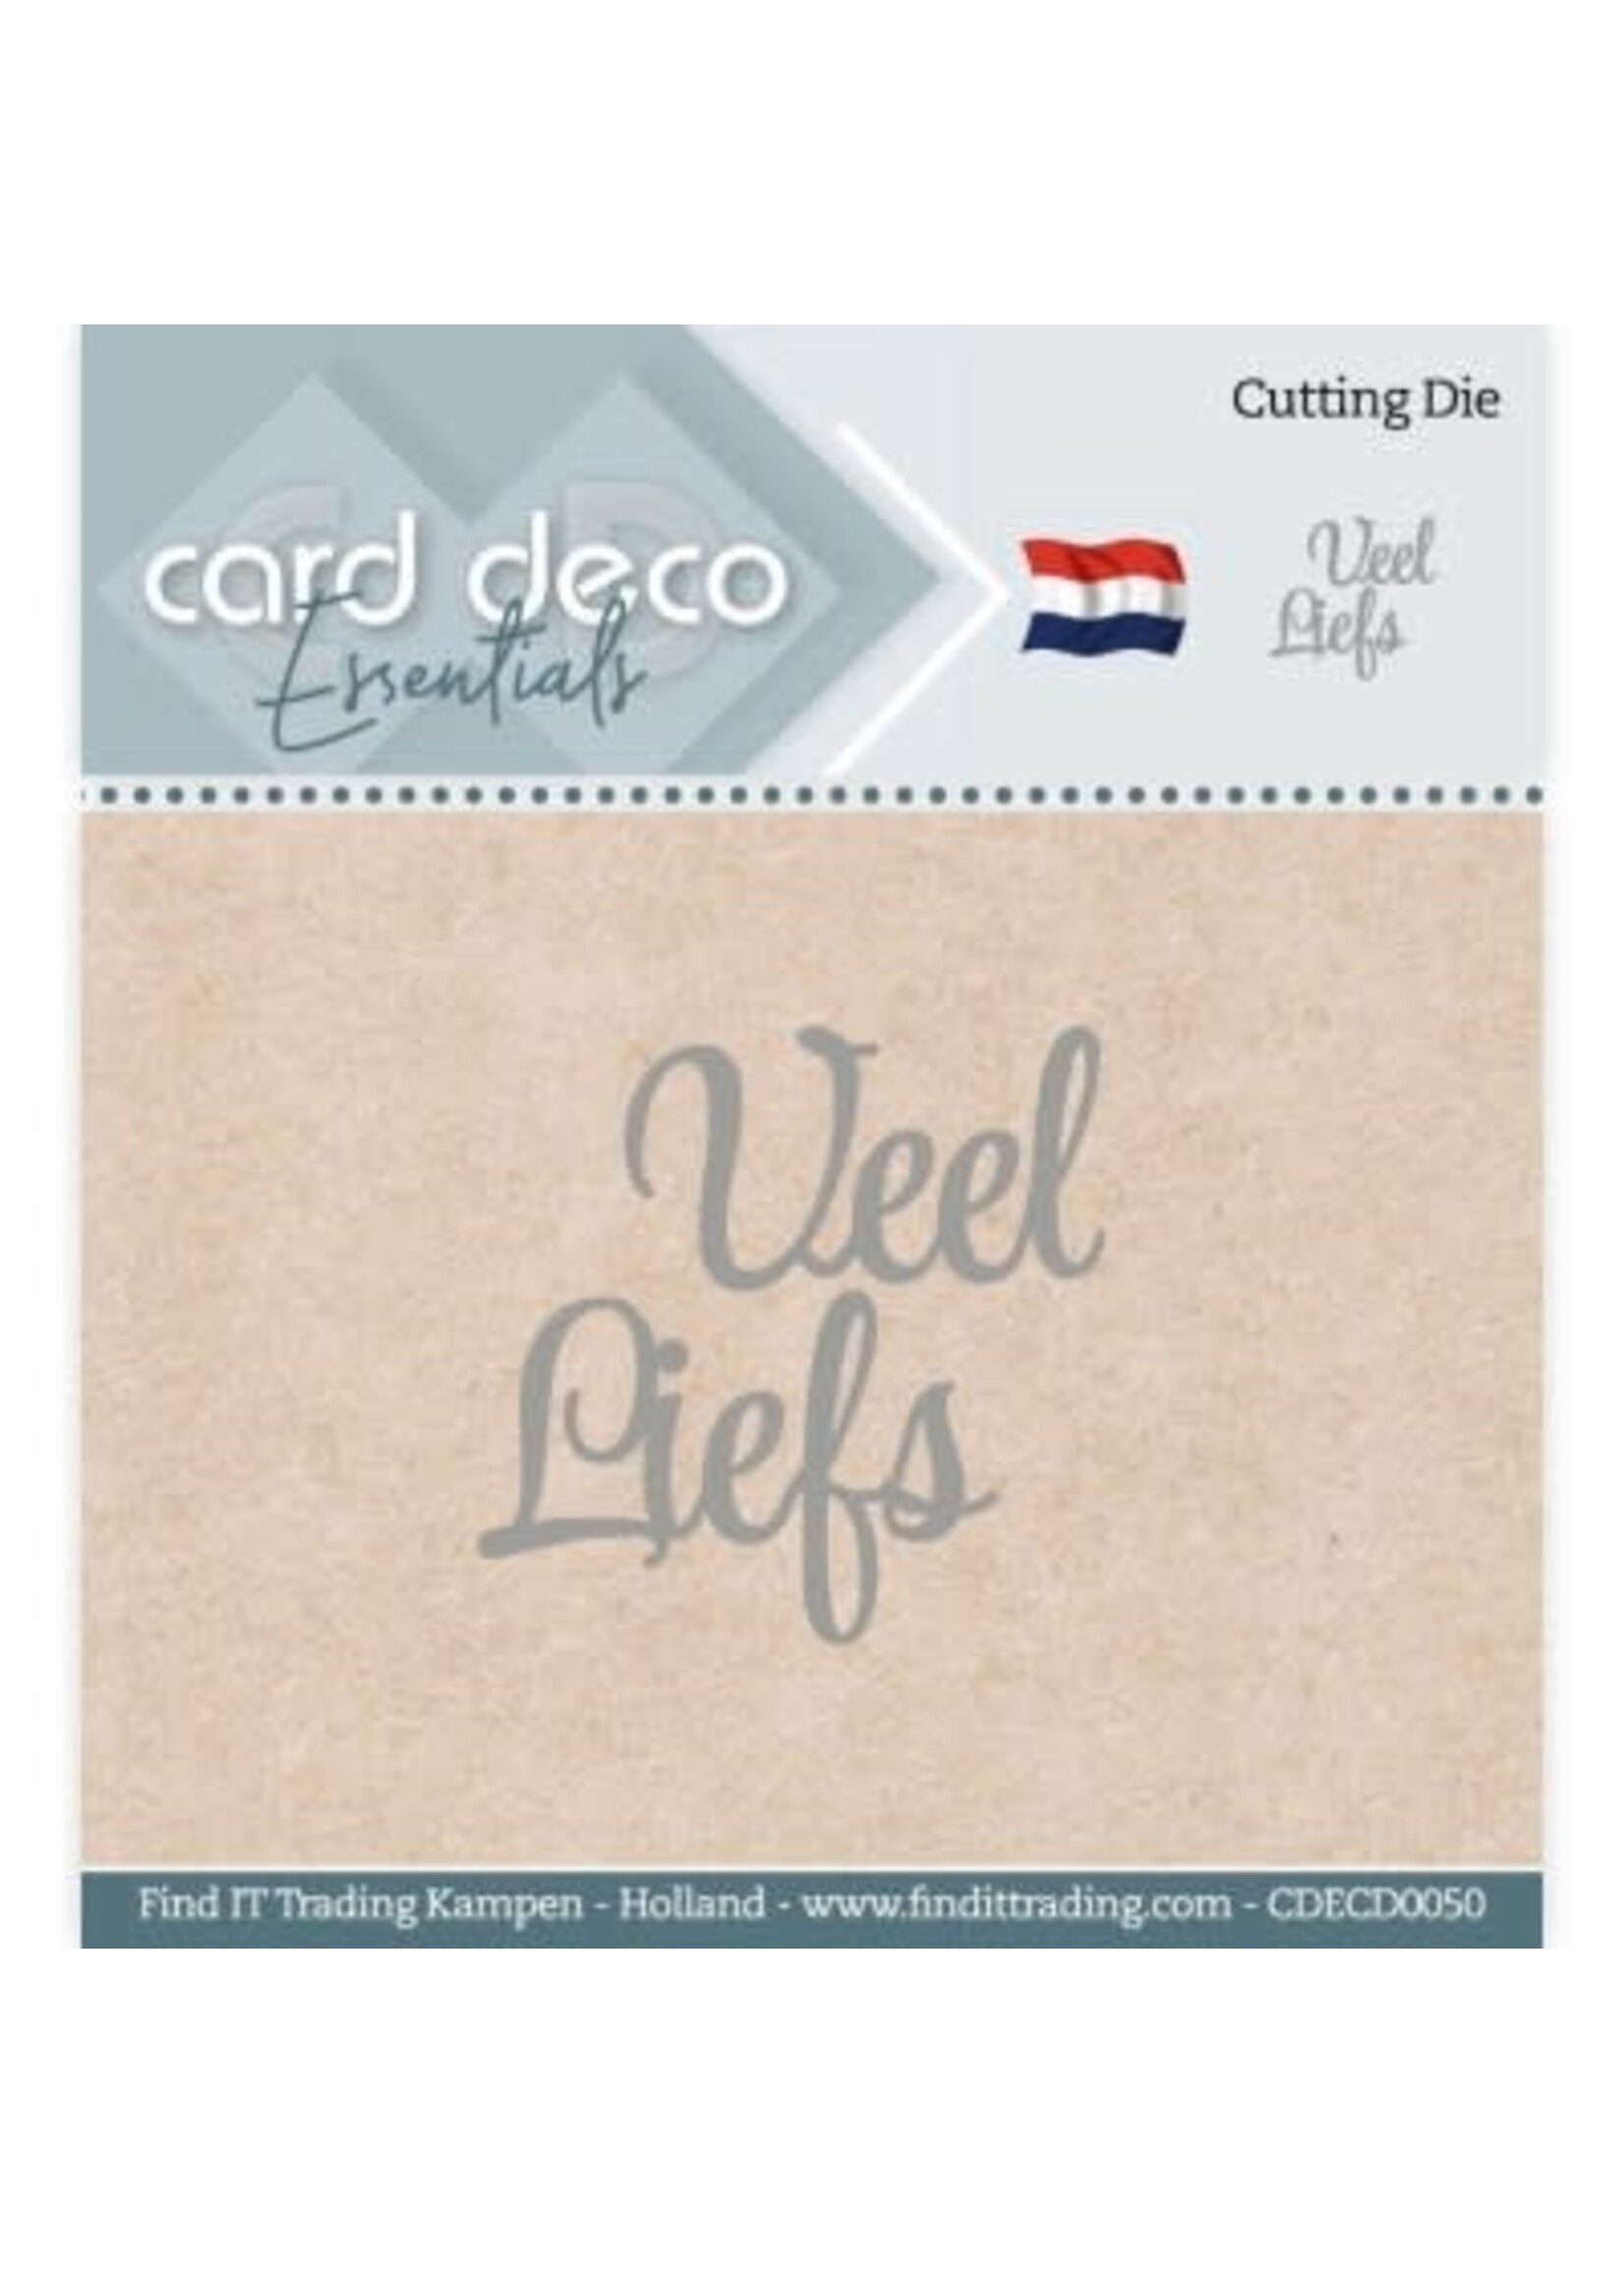 carddeco Veel Liefs - Cutting Dies By Card Deco Essentials